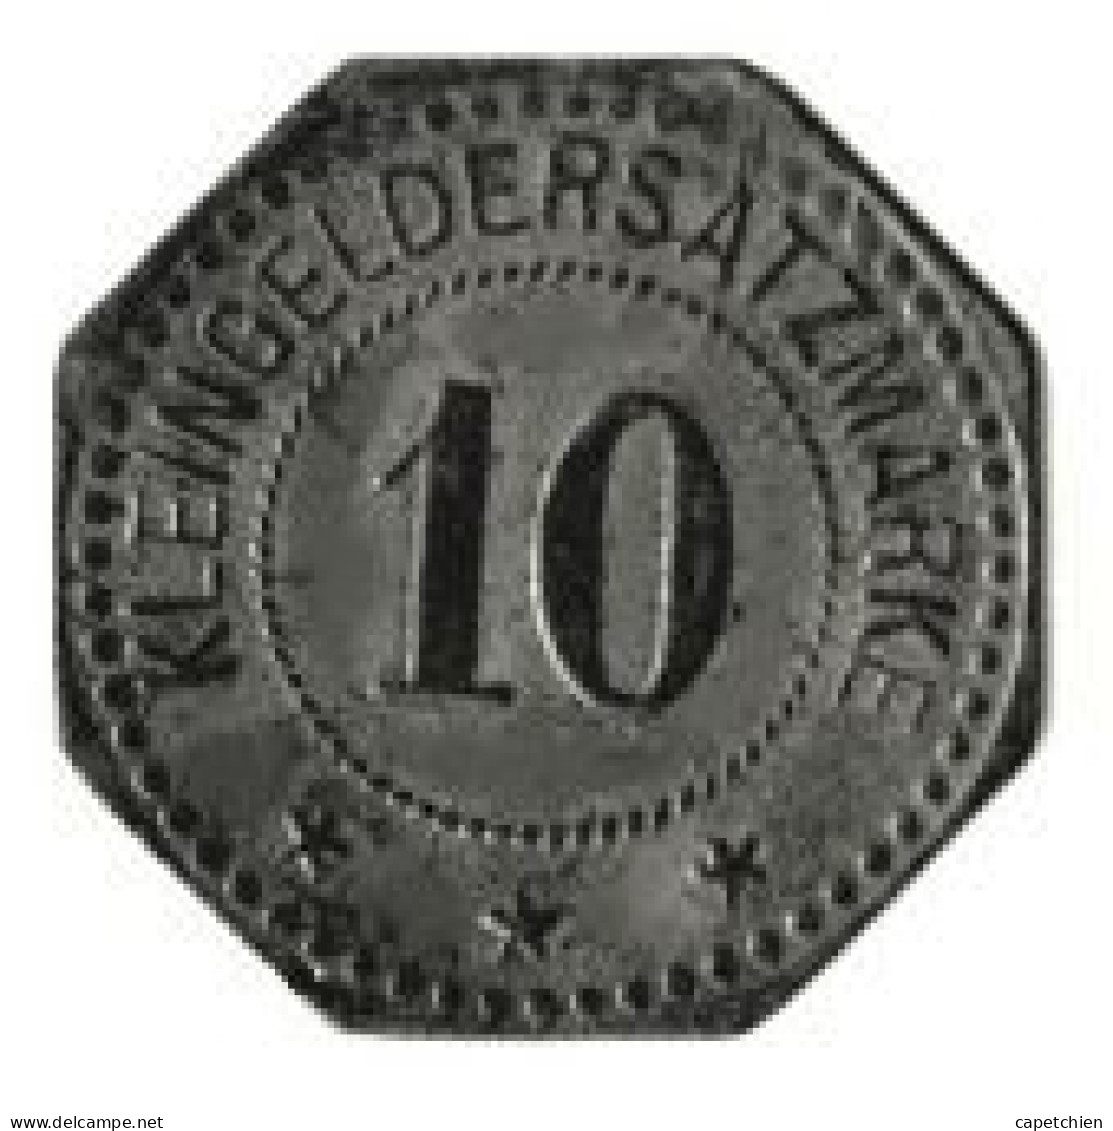 ALLEMAGNE / NOTGELD / STADT TORGAU  / 10 PFENNIG / 1917 / ZINC / 20.6 Mm / 1.75 G / ETAT TTB + - Monétaires/De Nécessité